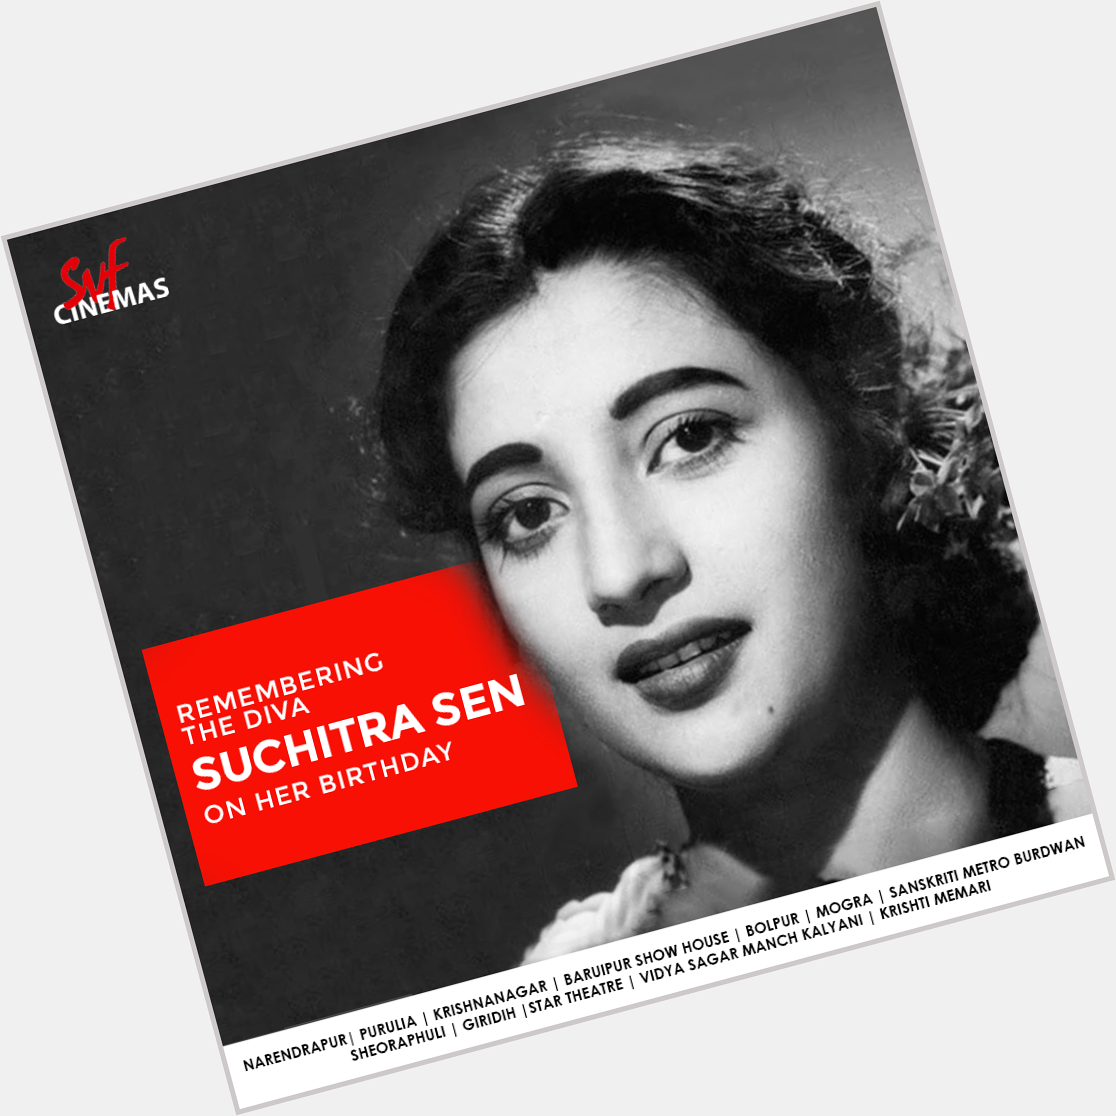 Remembering the diva Suchitra Sen on her birthday. wishes her Happy Birthday. 